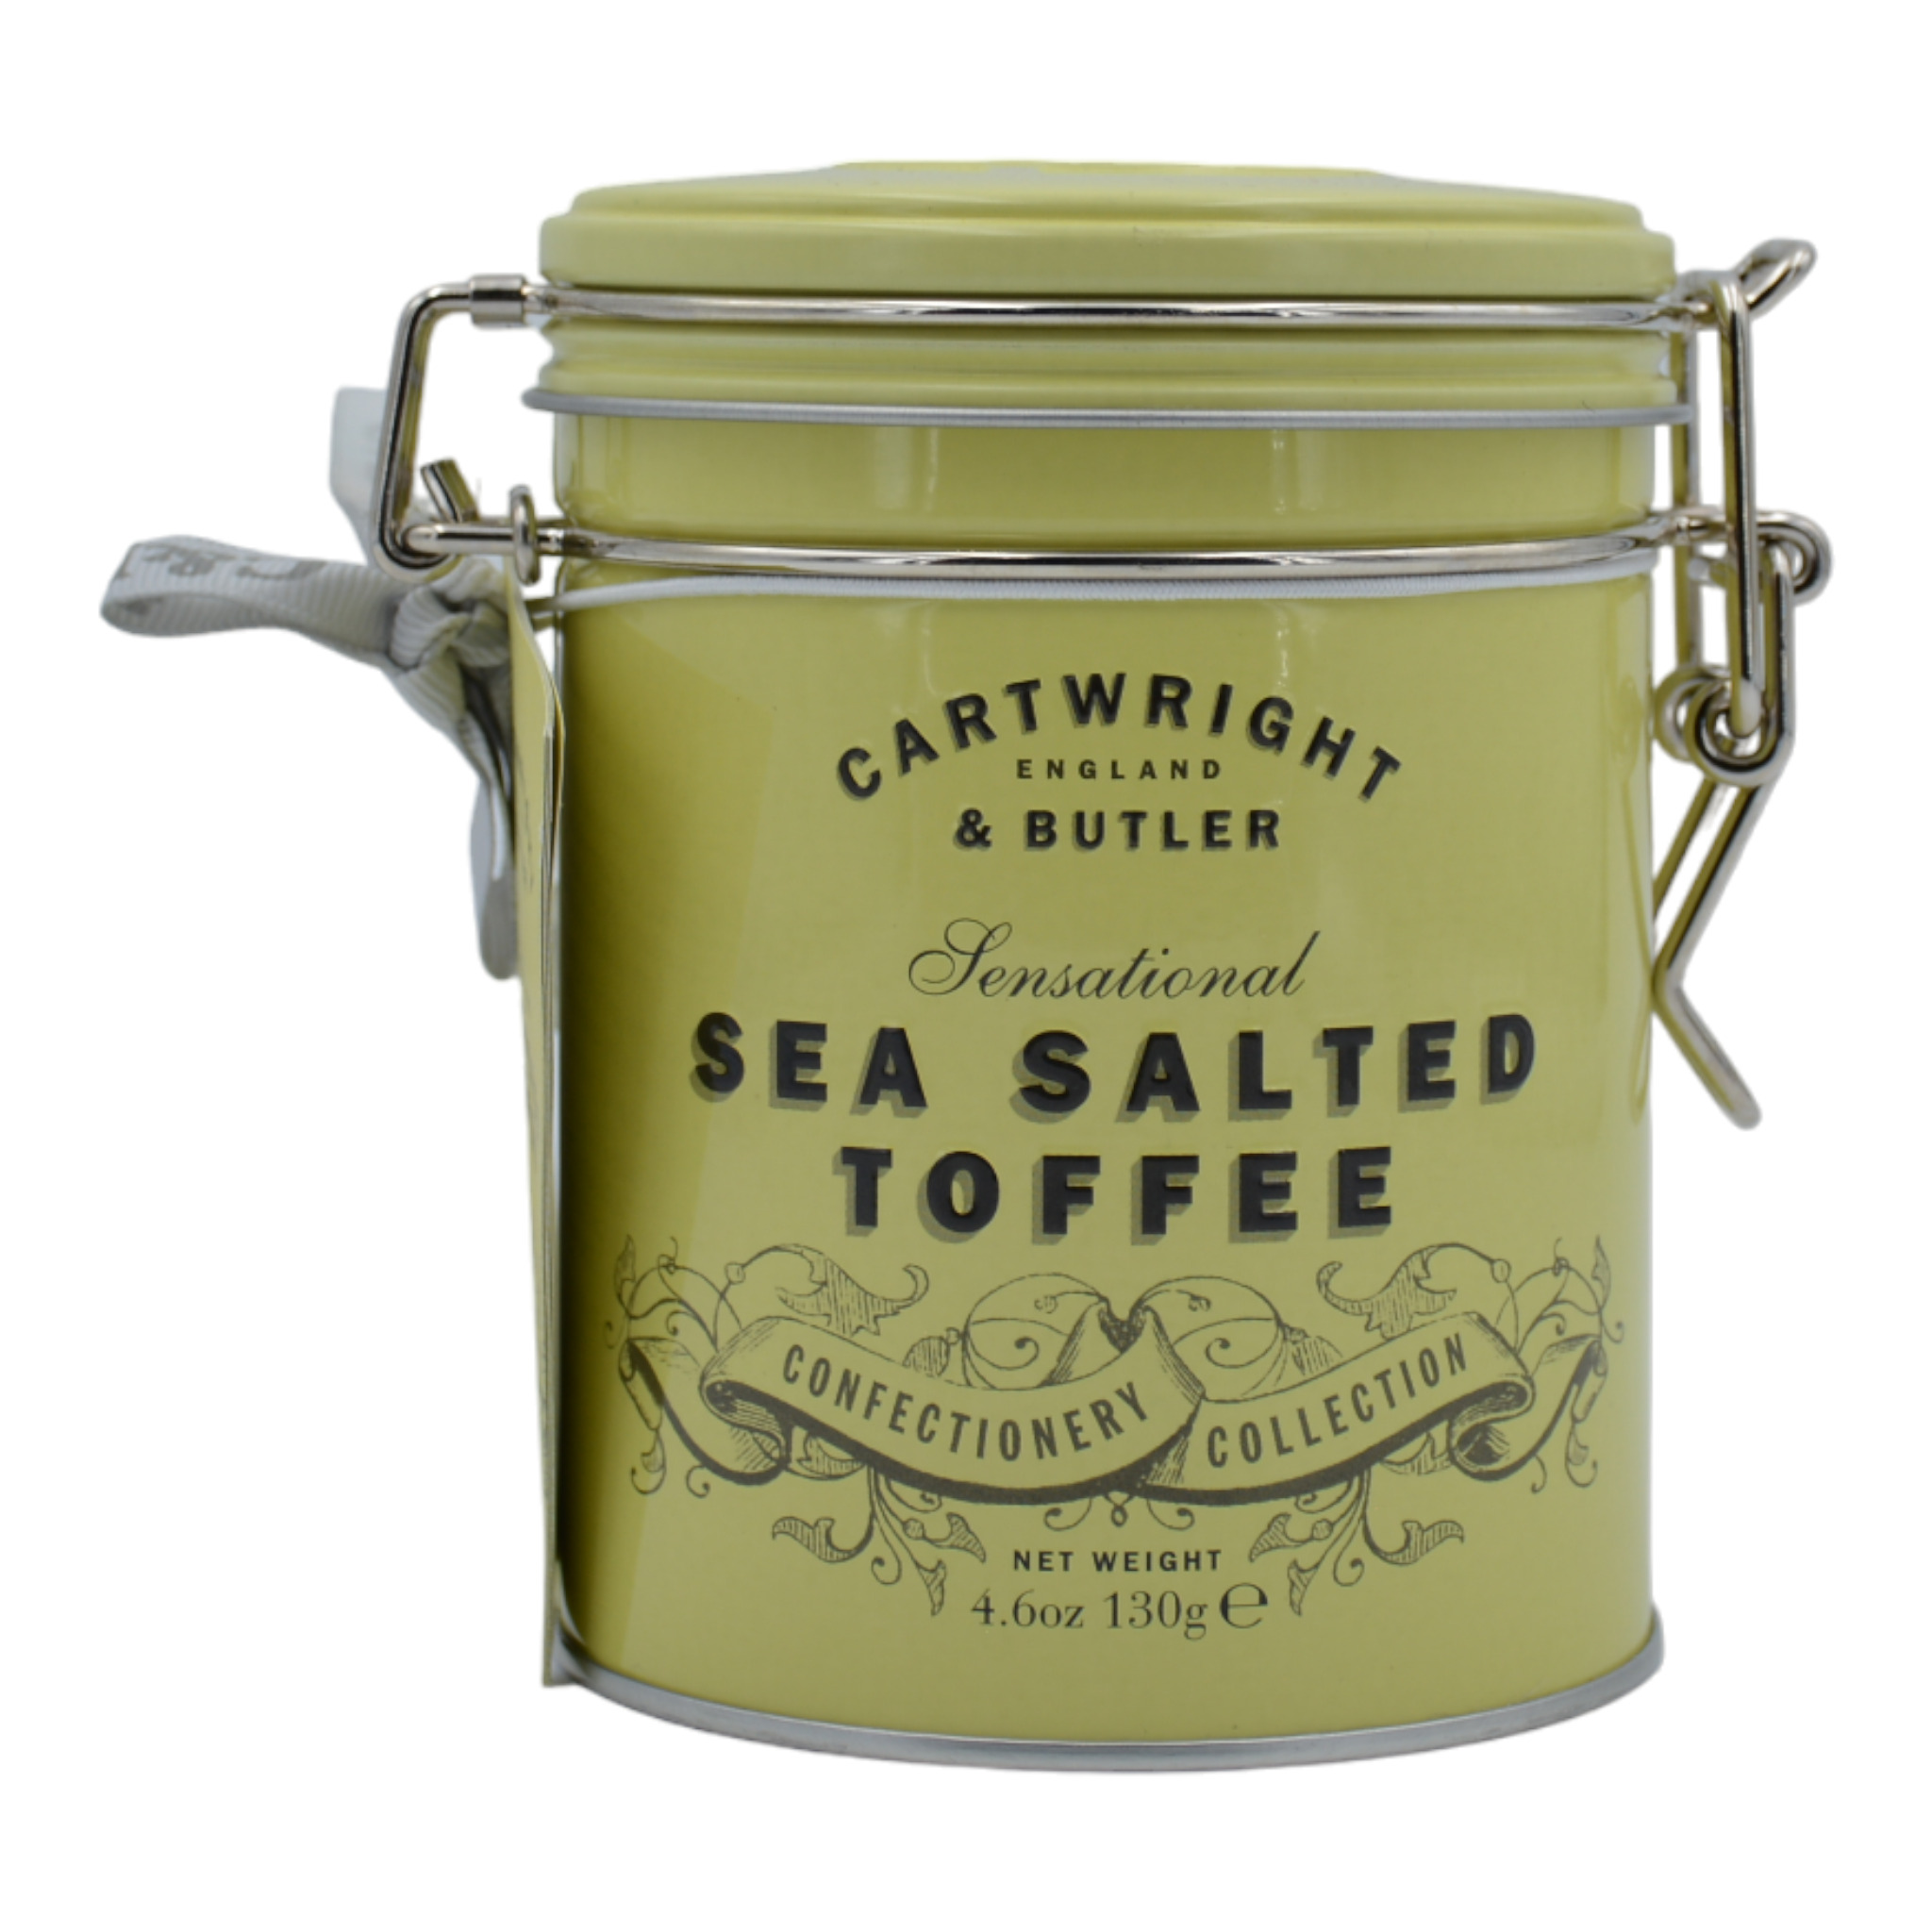 - Cartwright und Butler Sea salted Toffee f